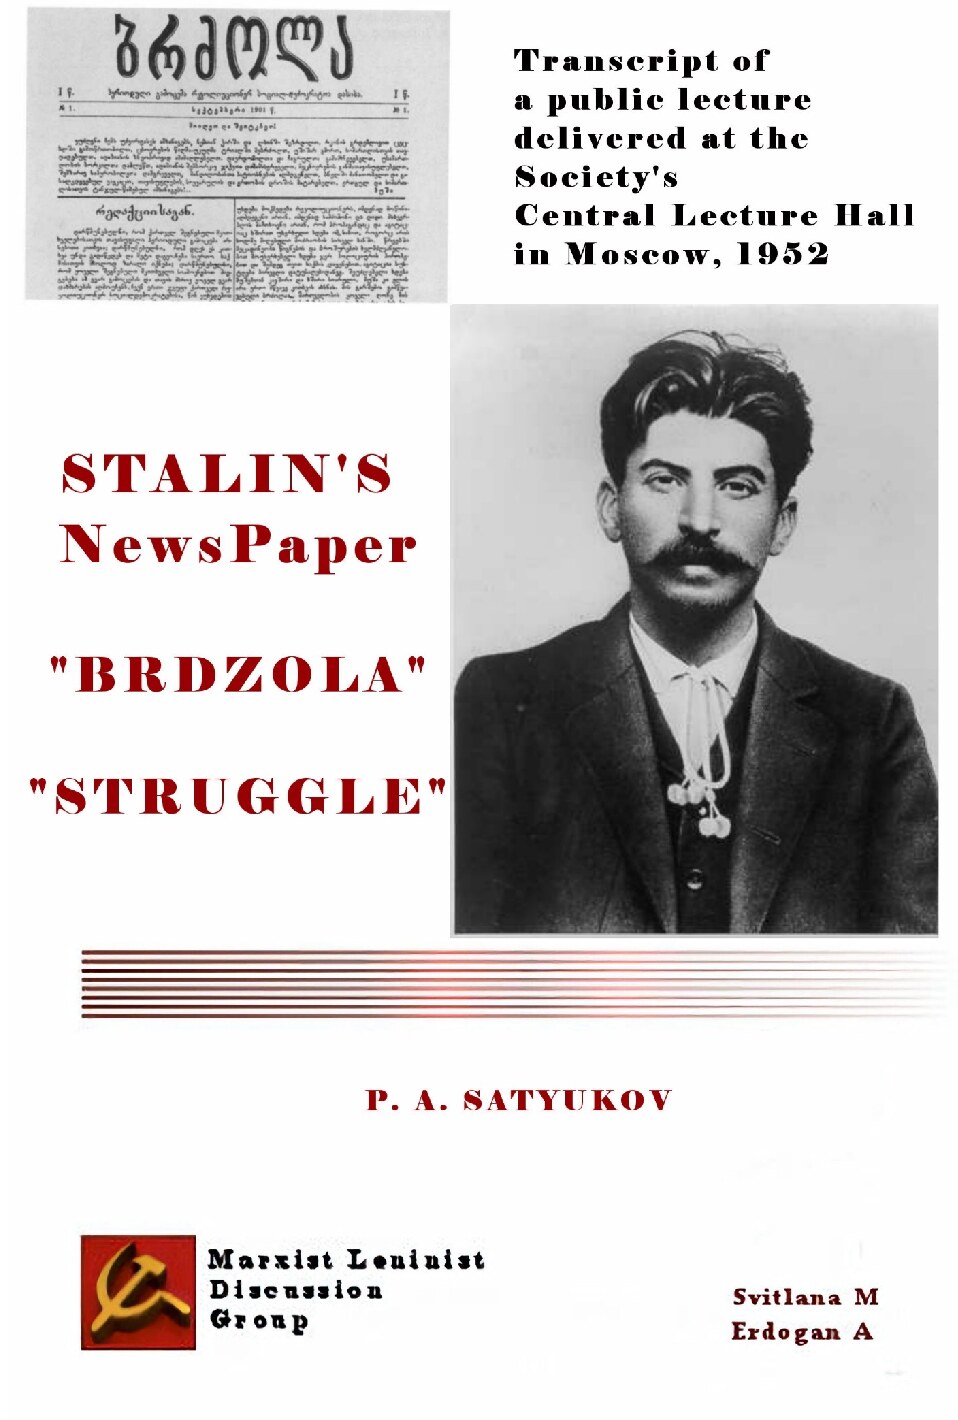 STALIN'S NEWSPAPER "BRDZOLA"